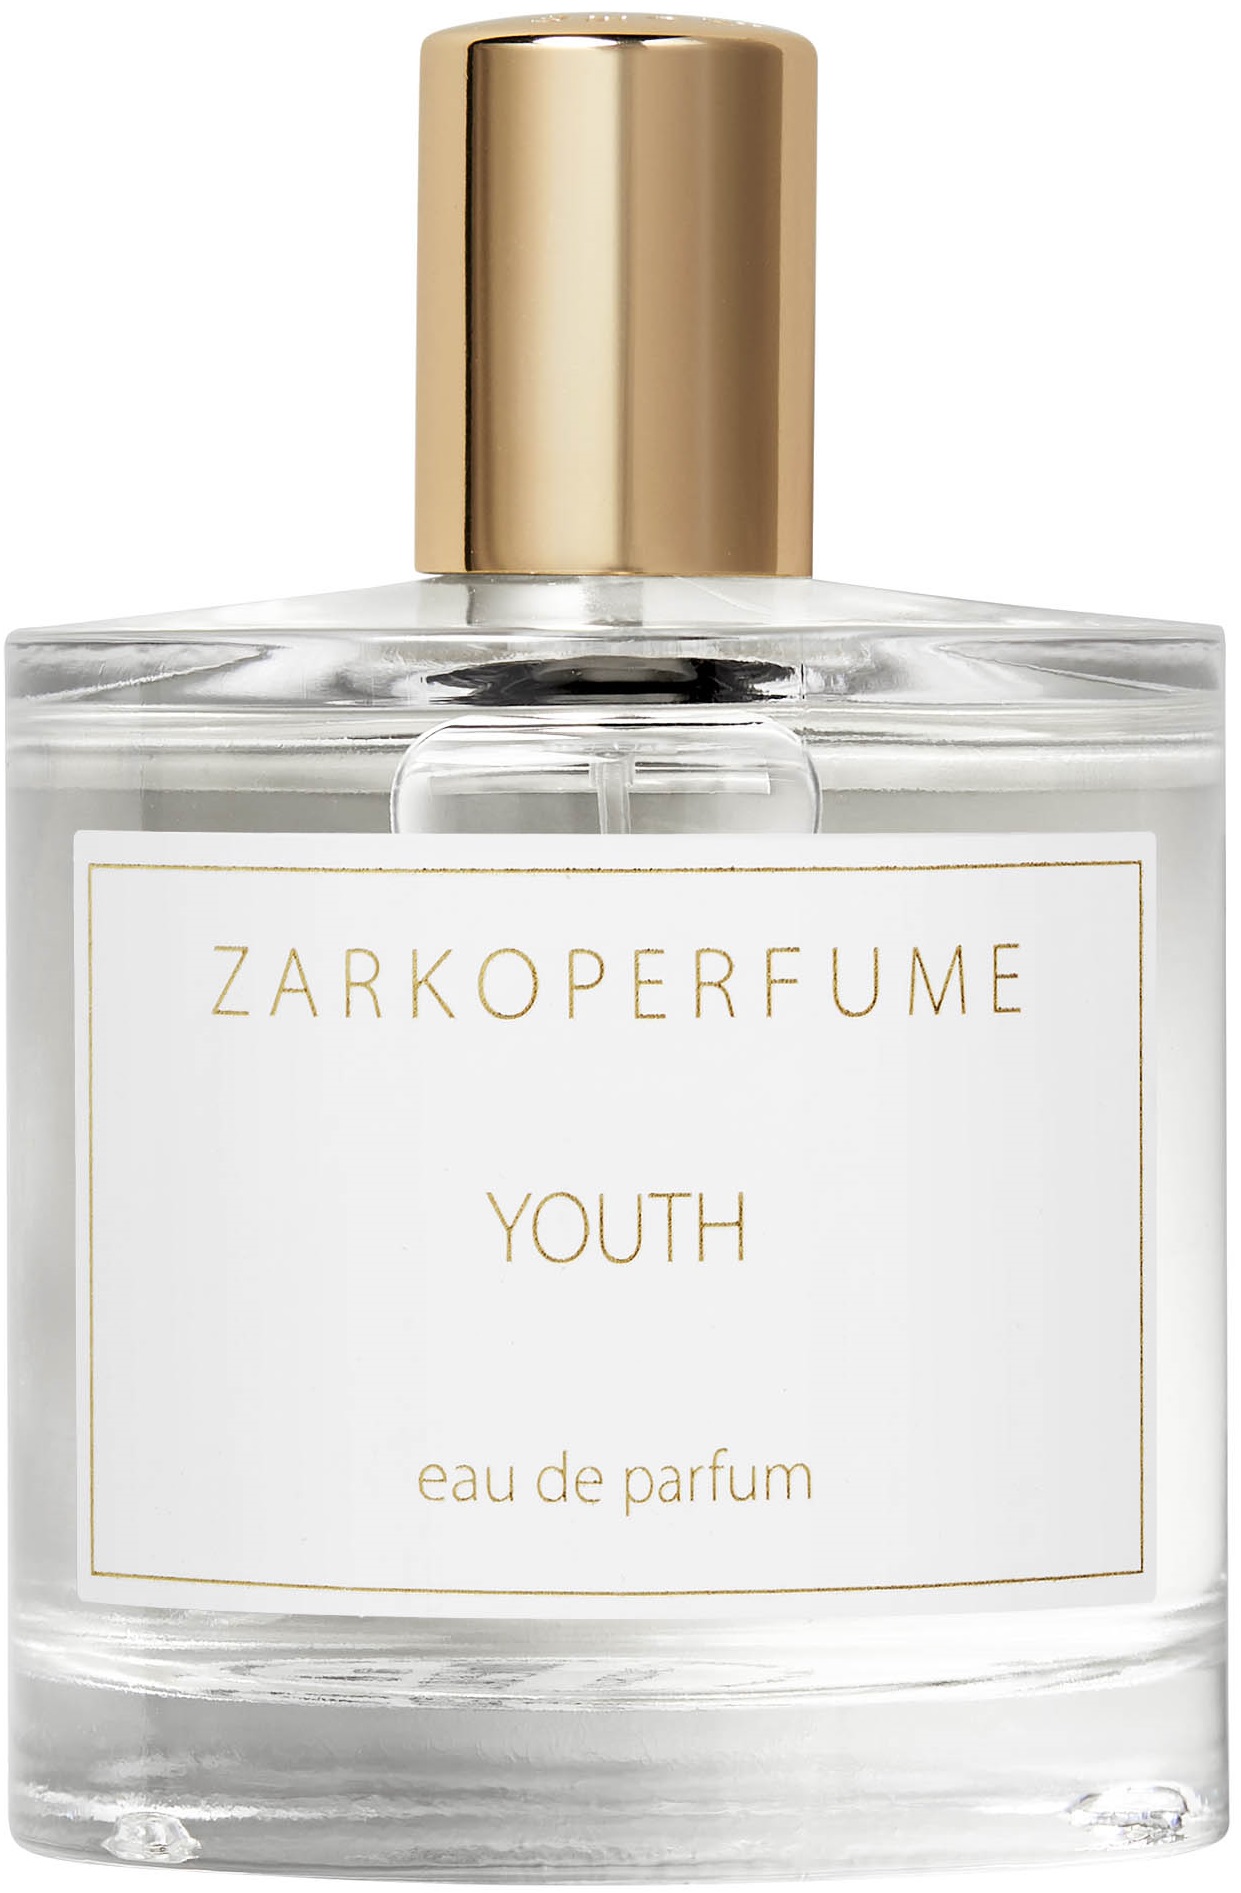 zarkoperfume youth